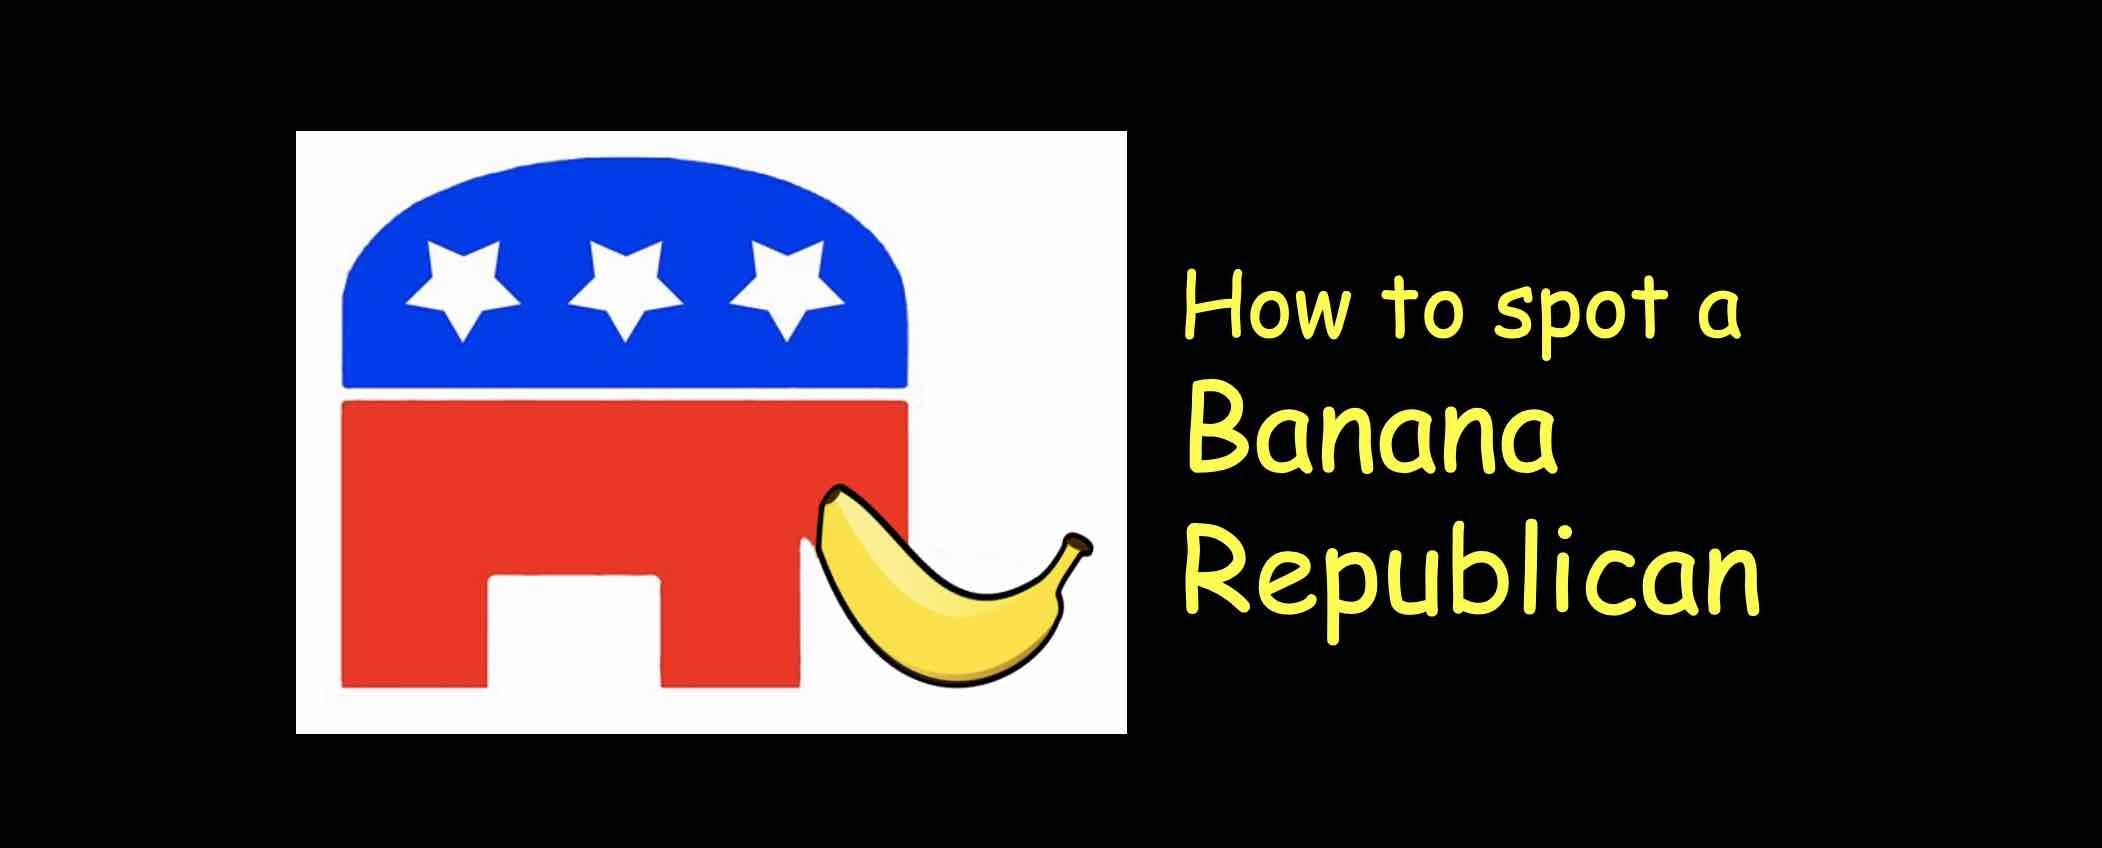 How to spot a Banana Republican